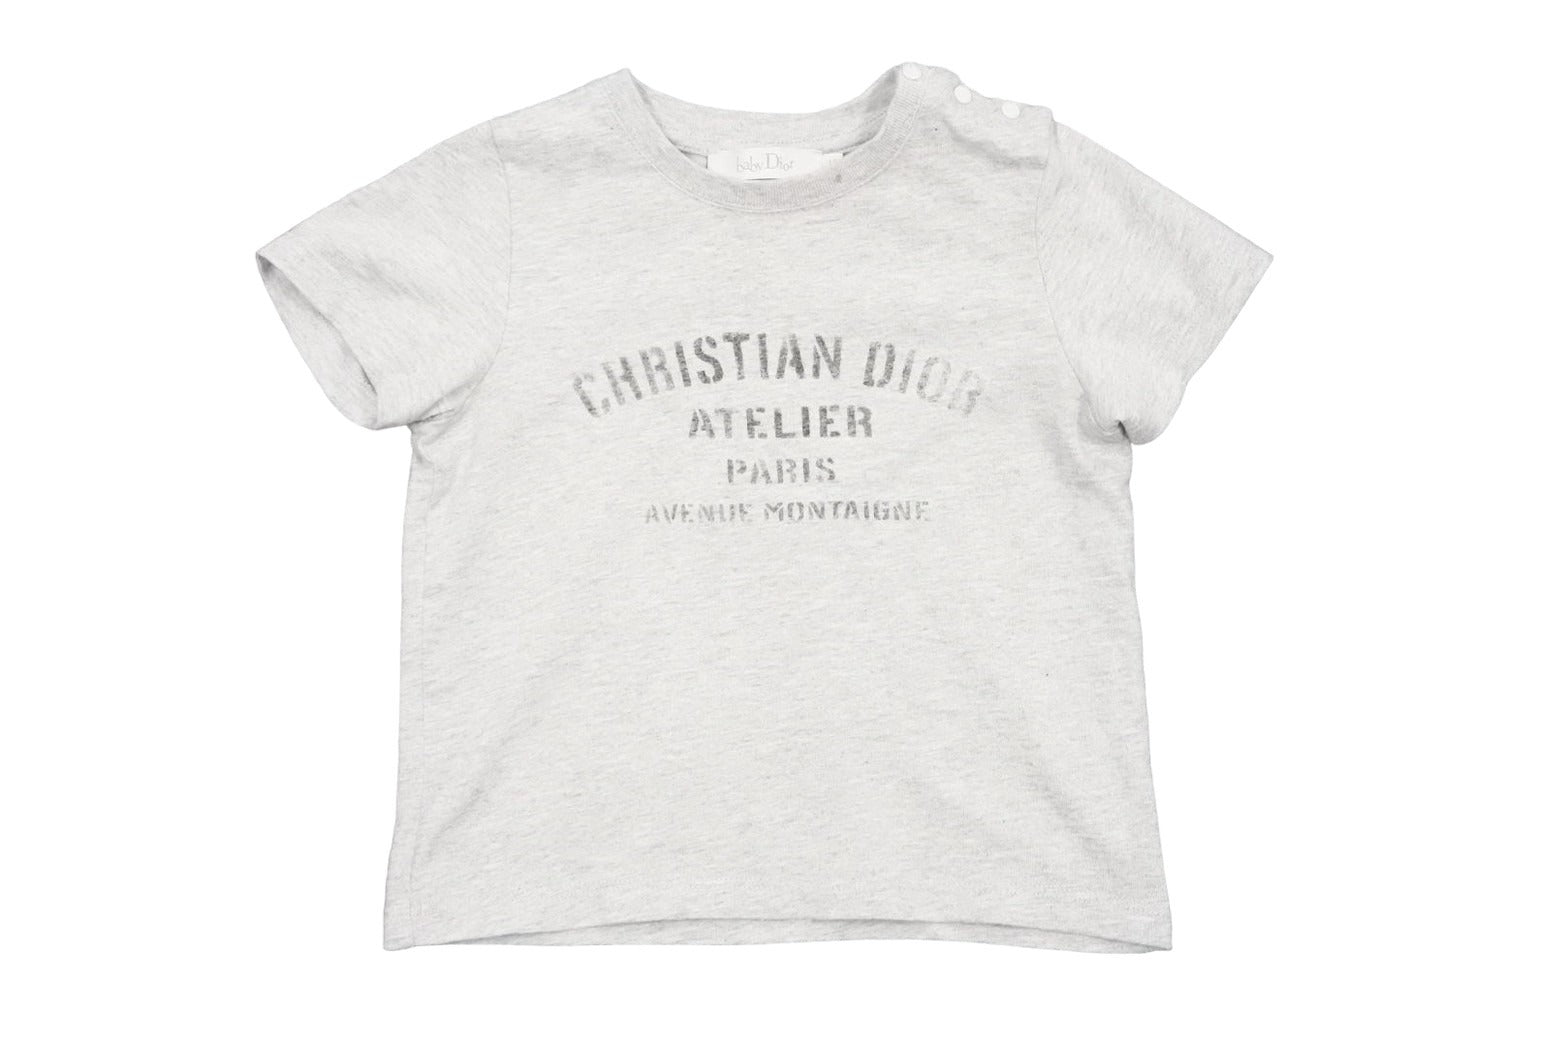 ChristianDior クリスチャンディオール ベイビーディオール キッズ アトリエ 半袖Tシャツ 1SBK43TEEA サイズ18 美品  15293